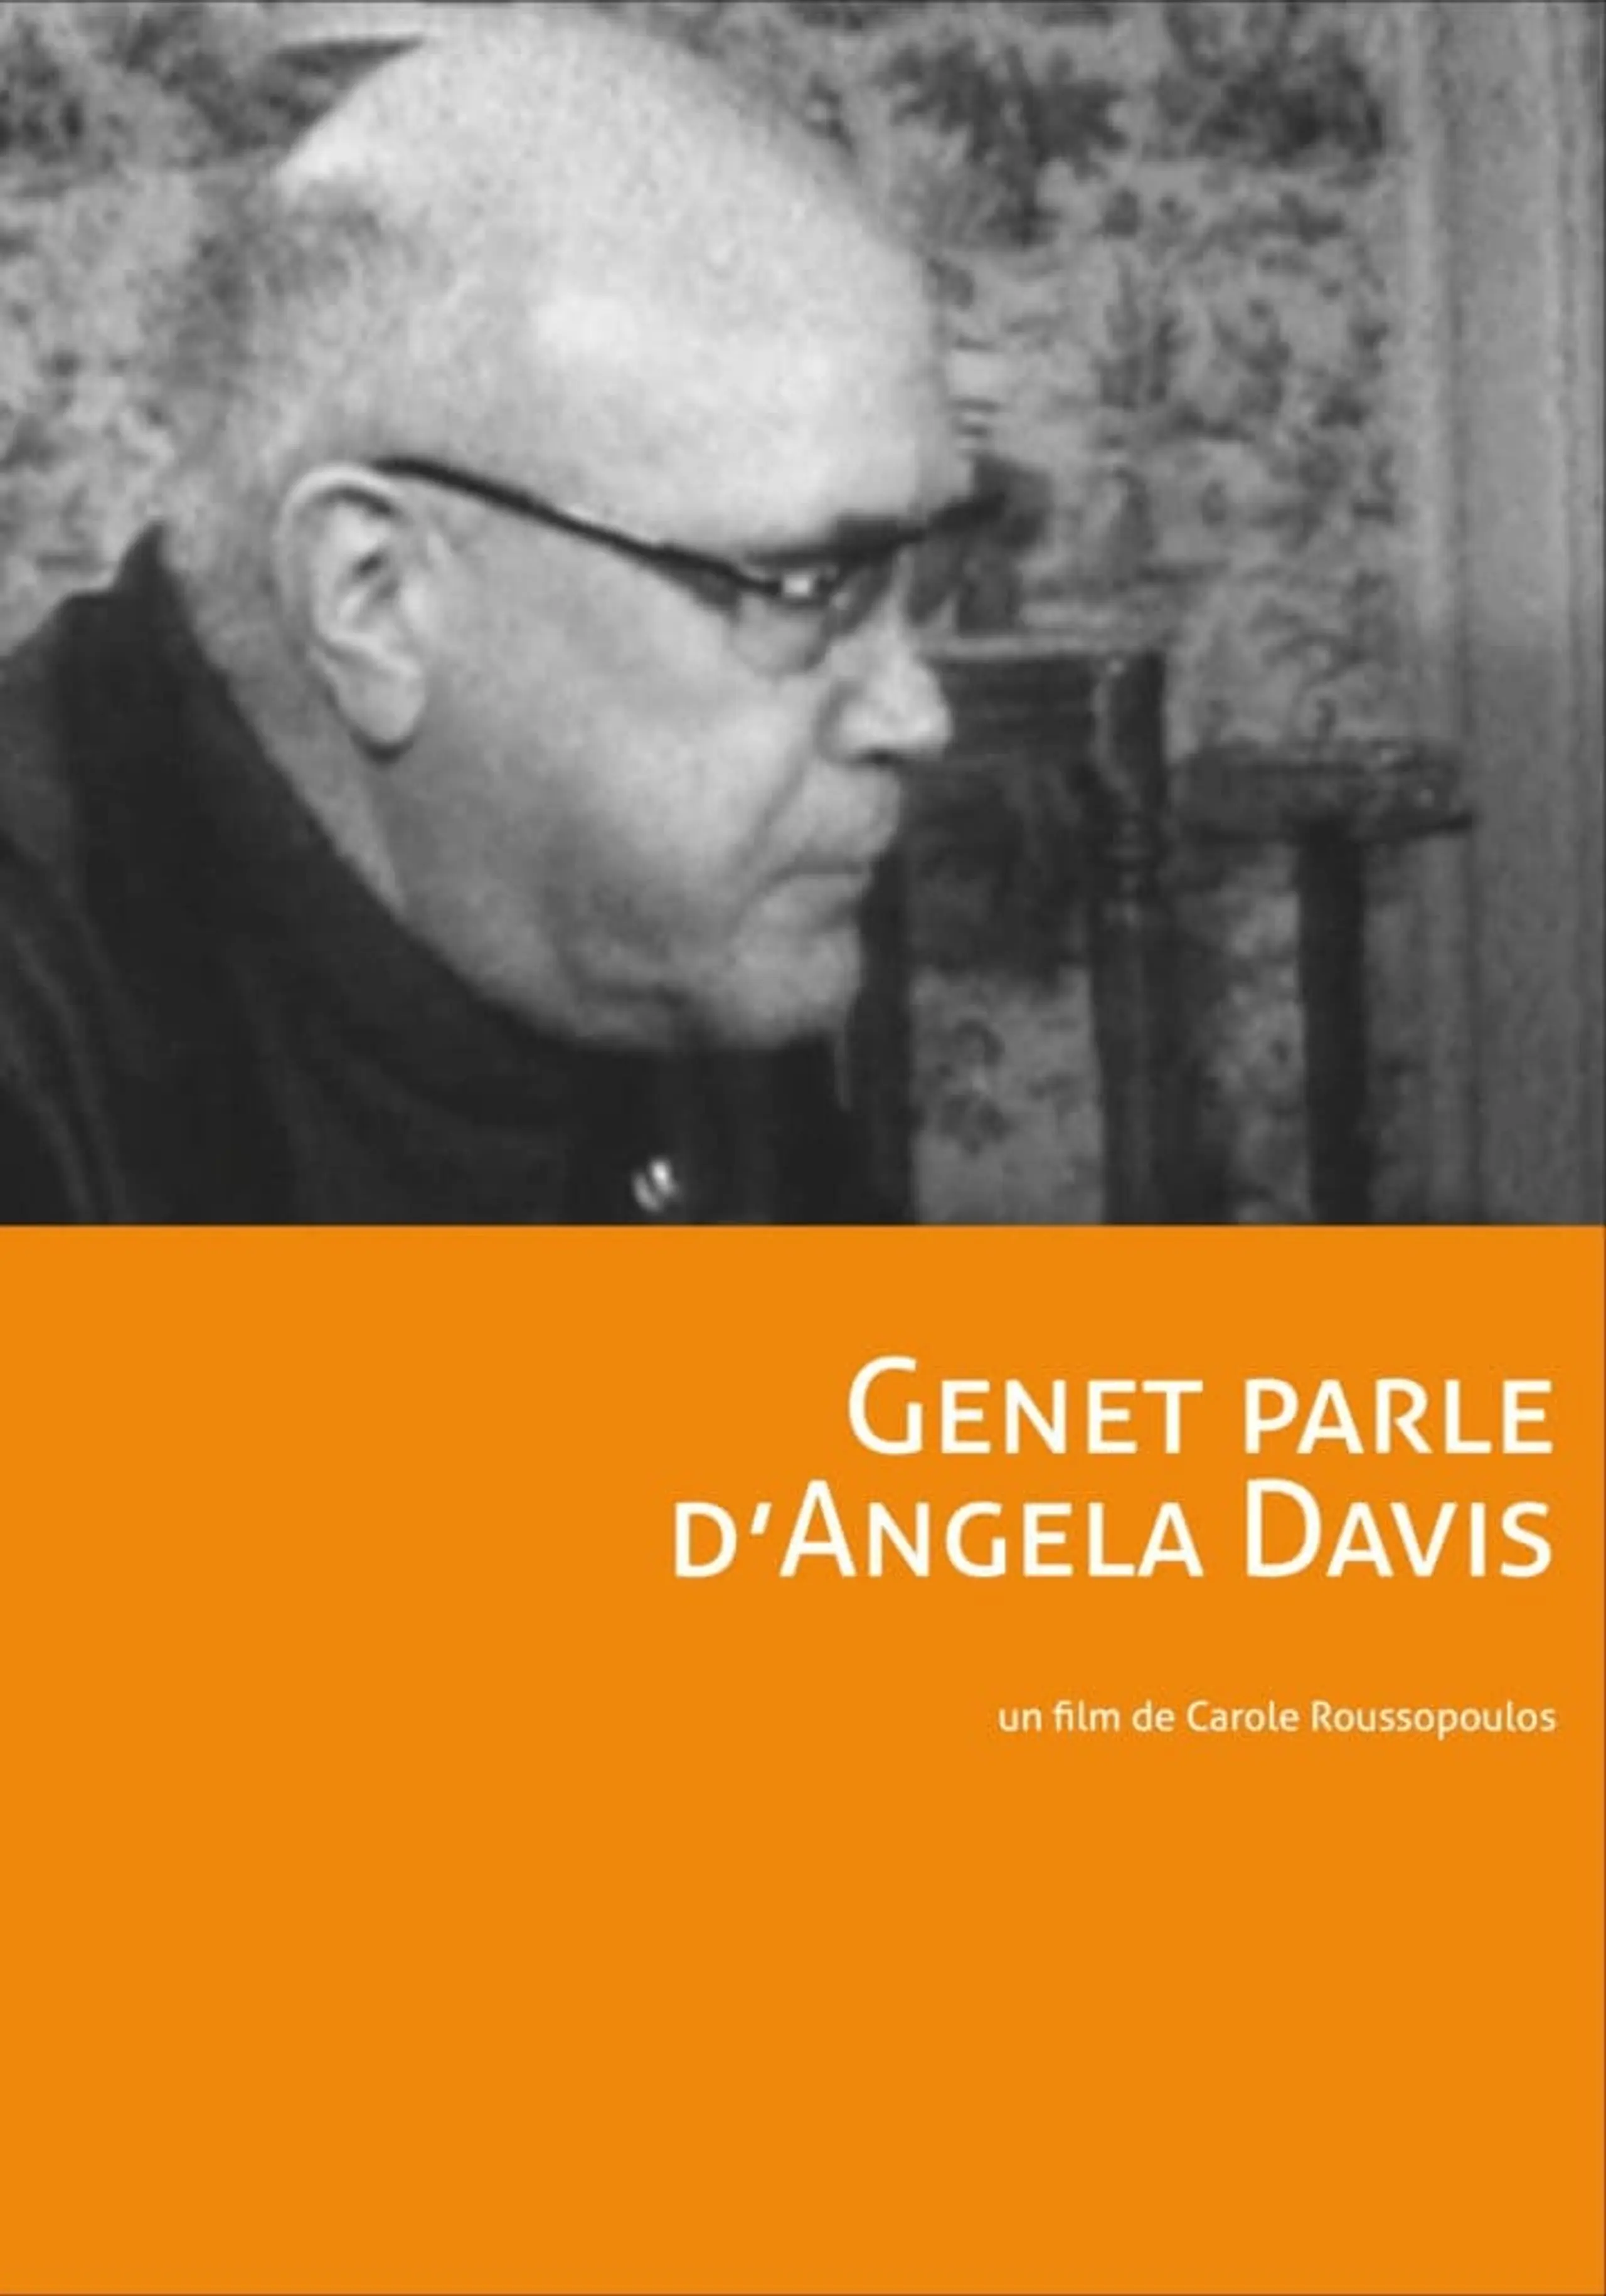 Genet parle d'Angela Davis